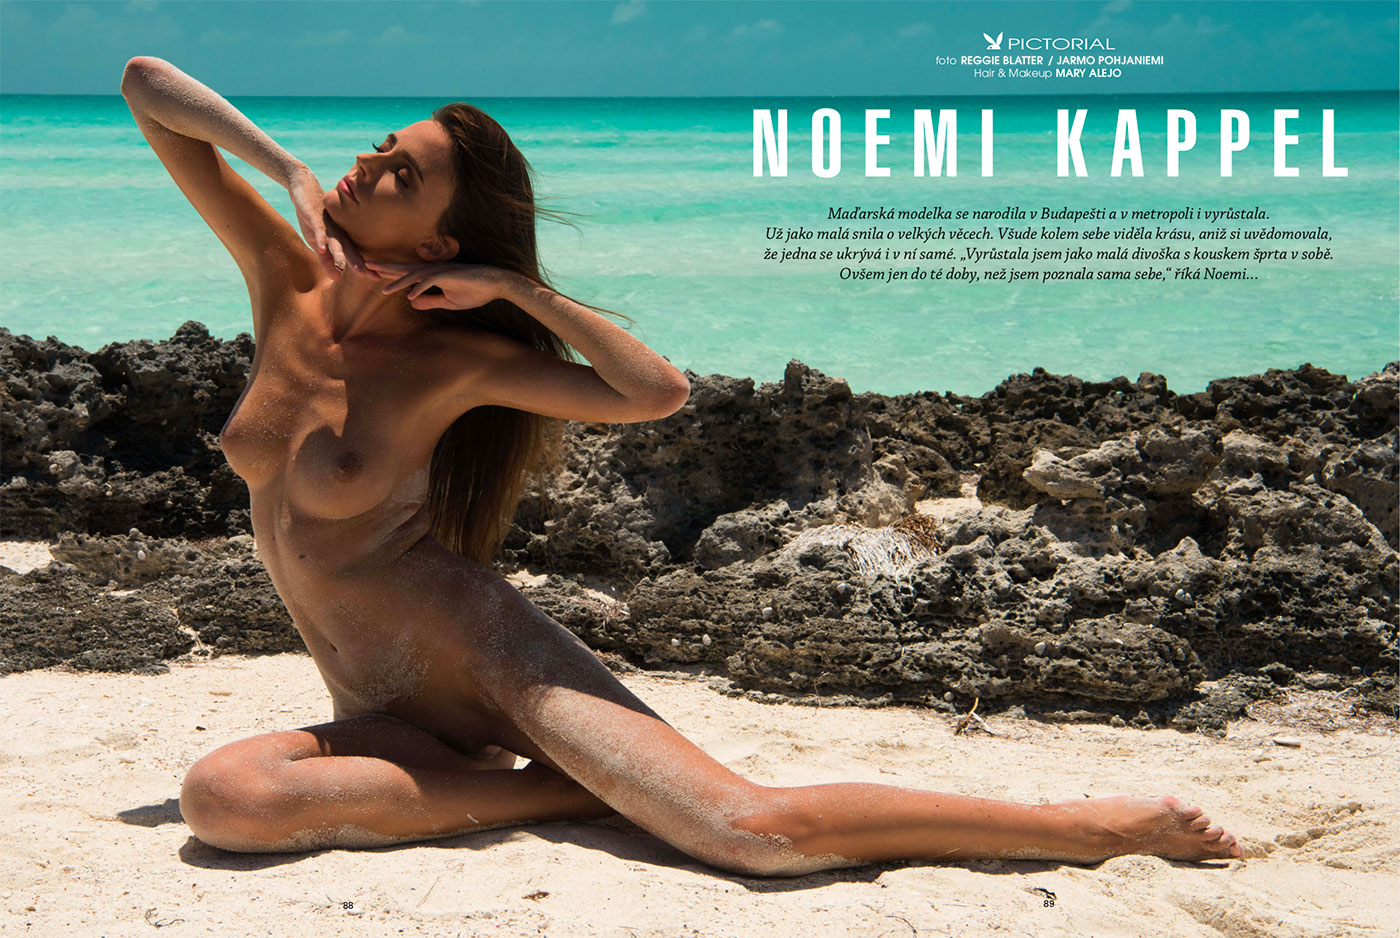 Noemi Kappel for Playboy by Reggie Blatter - Click to enlarge.